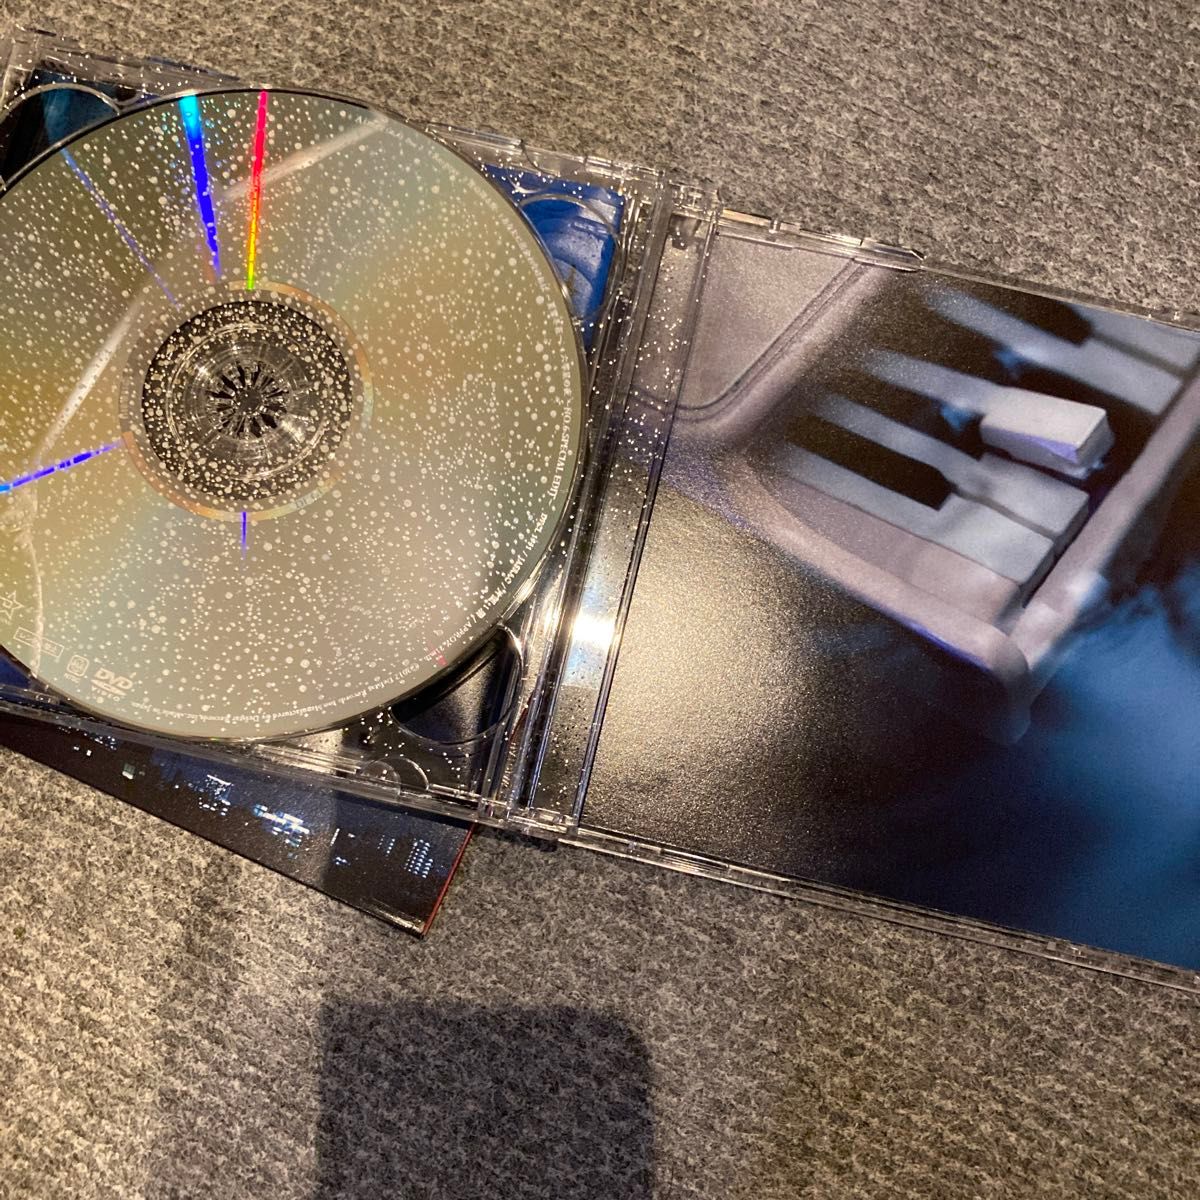 Aimer / Sleepless Nights[DVD付初回生産限定盤]